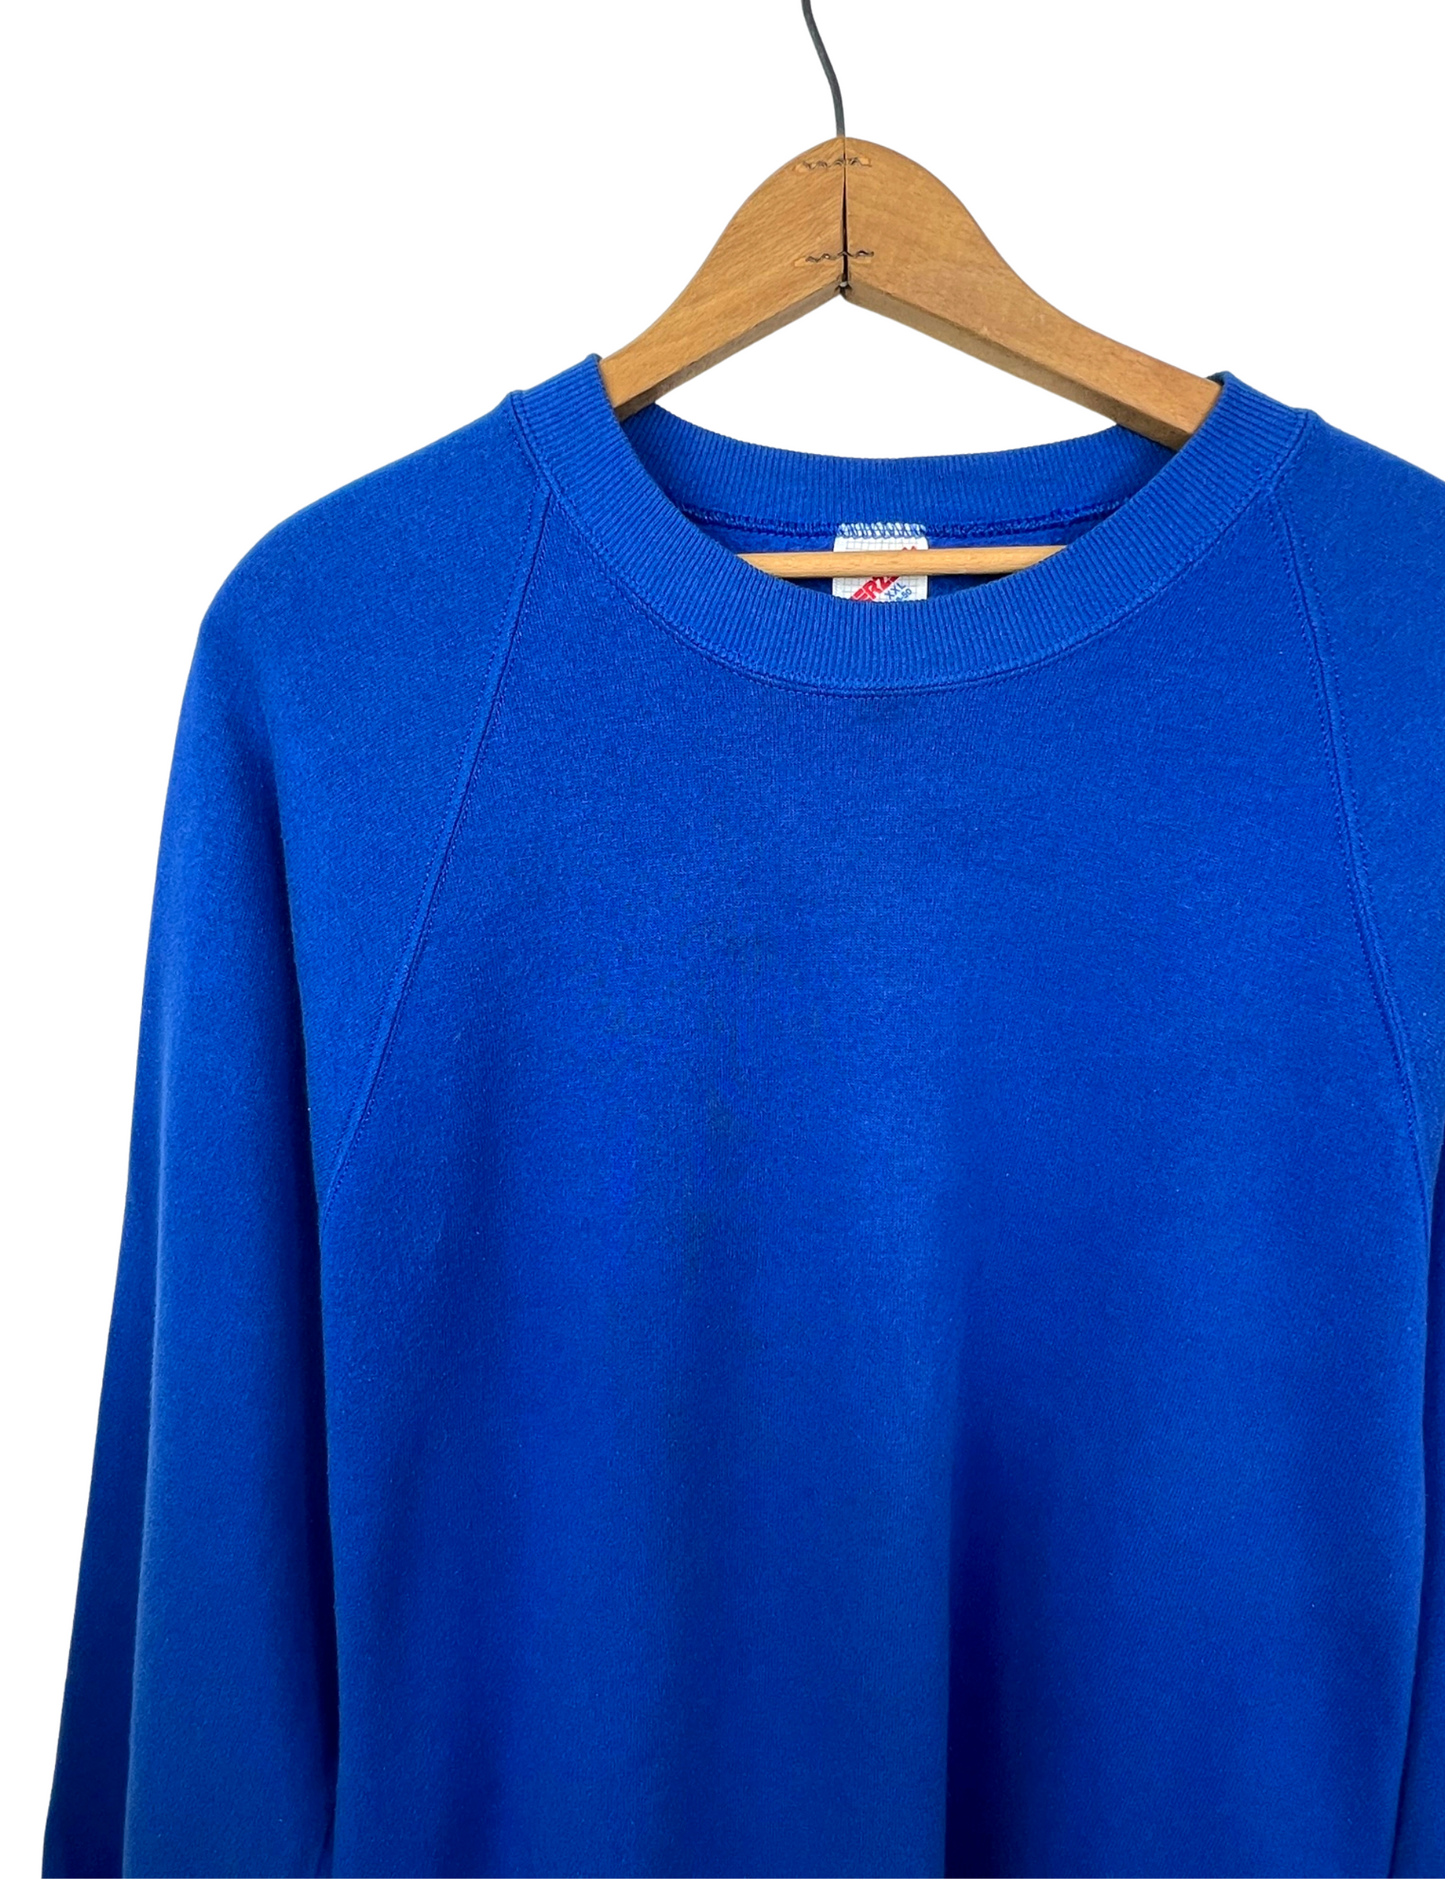 80’s Jerzees Super Soft Cobalt Blue Basic Crew Sweatshirt Size 2X